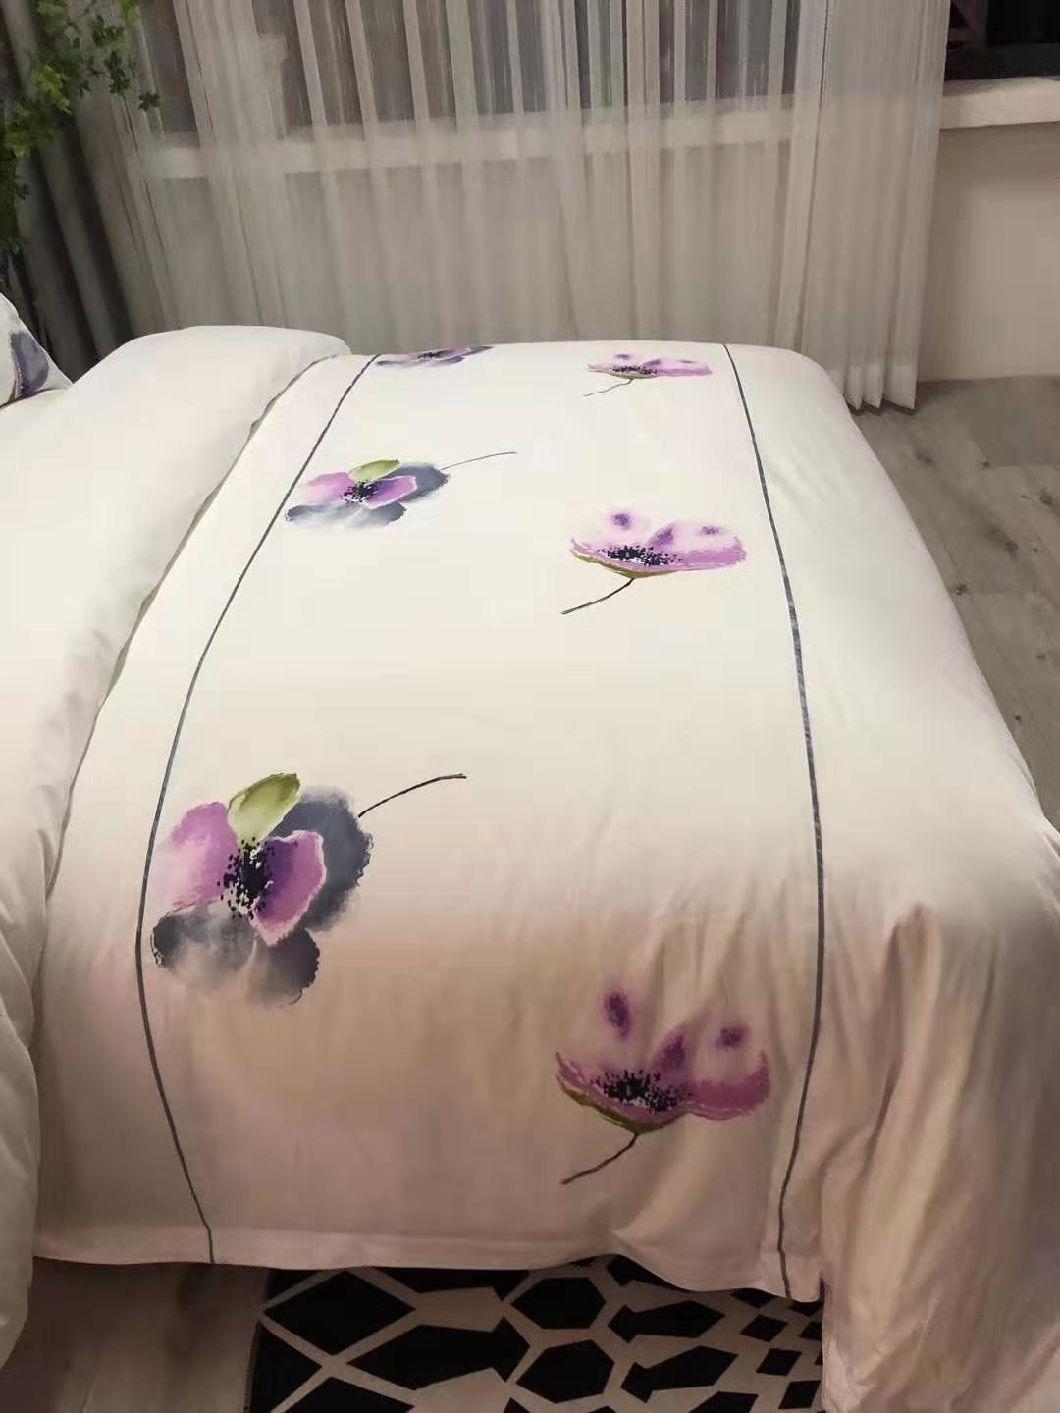 Bed Professional Linen Factory Price 5 Star Comfort Sheet 4 PCS 100% Cotton Hotel Bedding Set Luxury